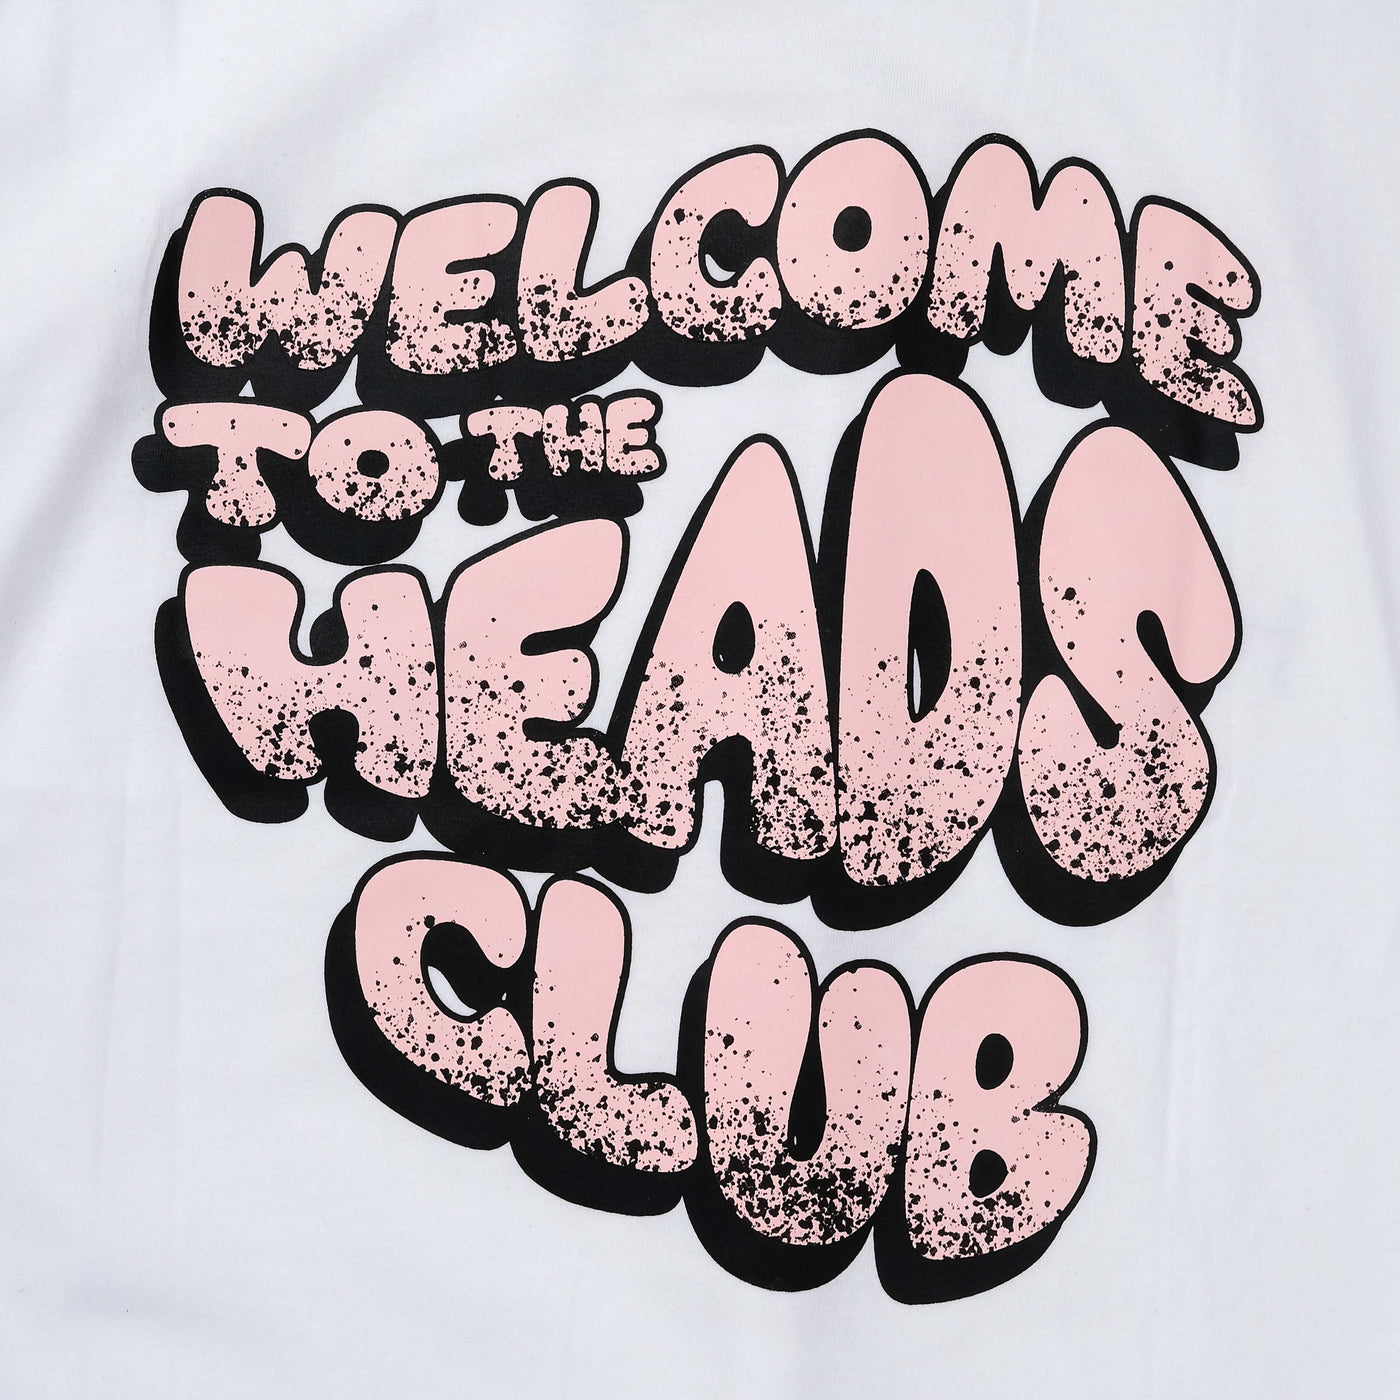 The Heads Club Tee White